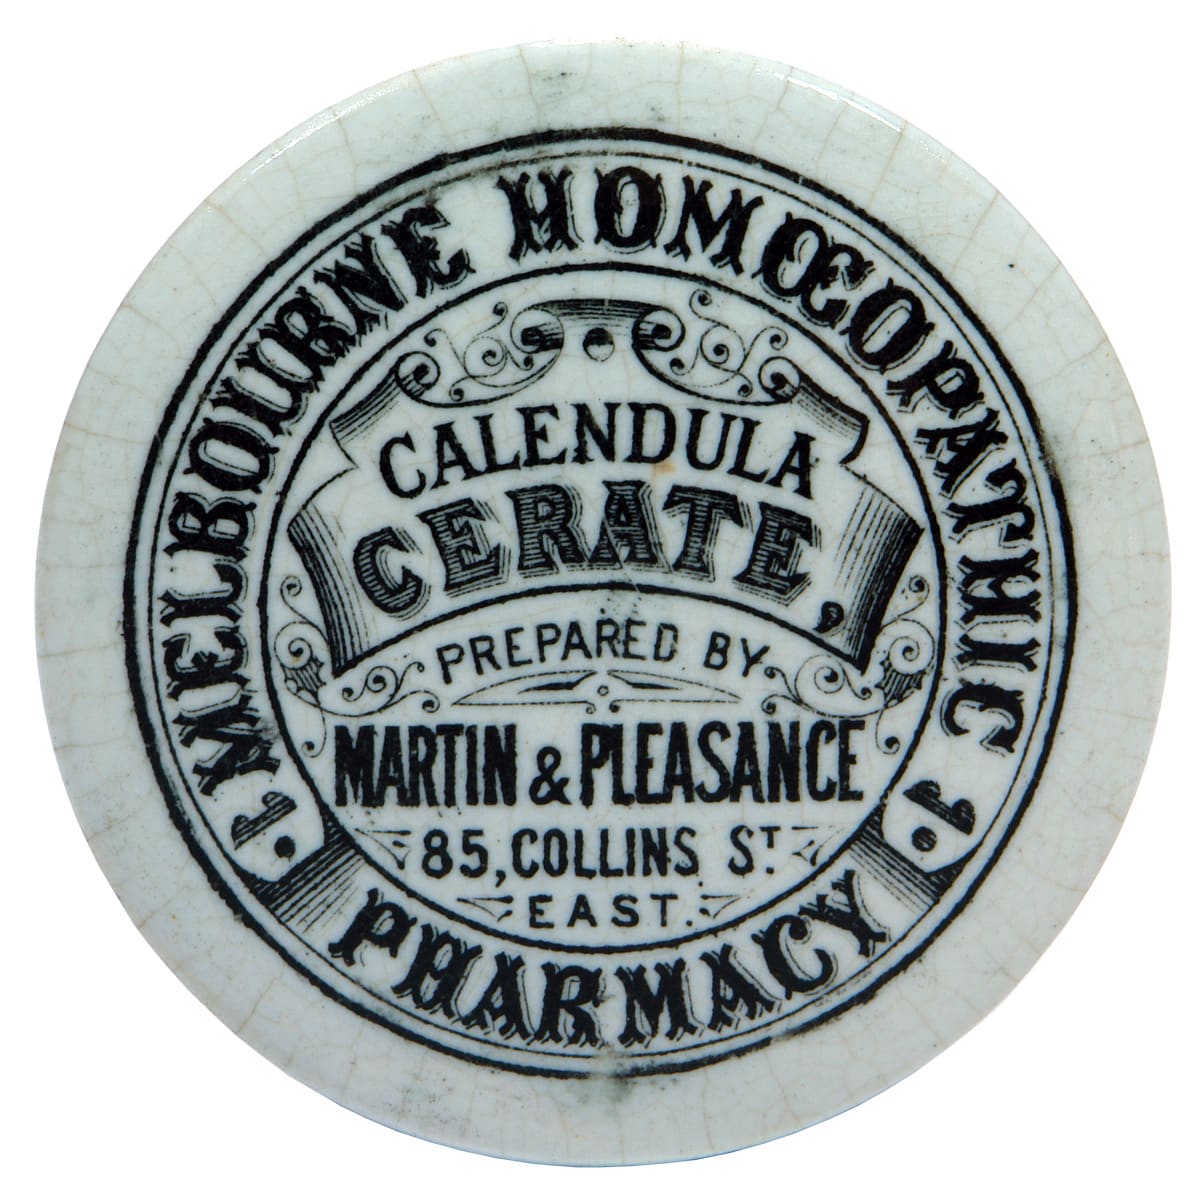 Martin Pleasance Calendula Cerate Homeopathic Pot Lid